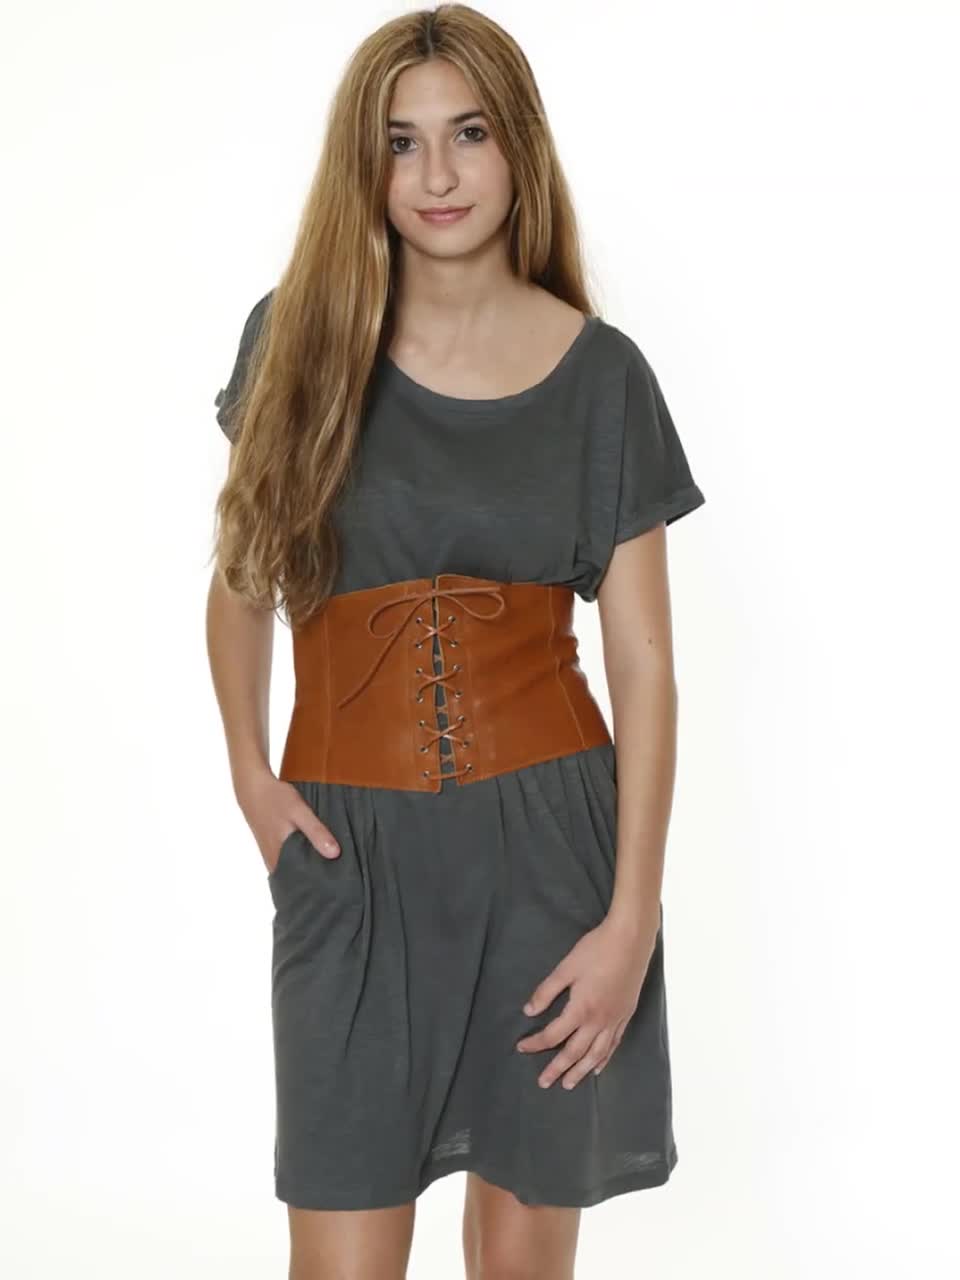 Leather Corset Belt, Brown Lace up Leather Belt, Women Wide Belt, Boho  Style Belt, Corset With Lacing, Medieval Corset Belt -  Canada